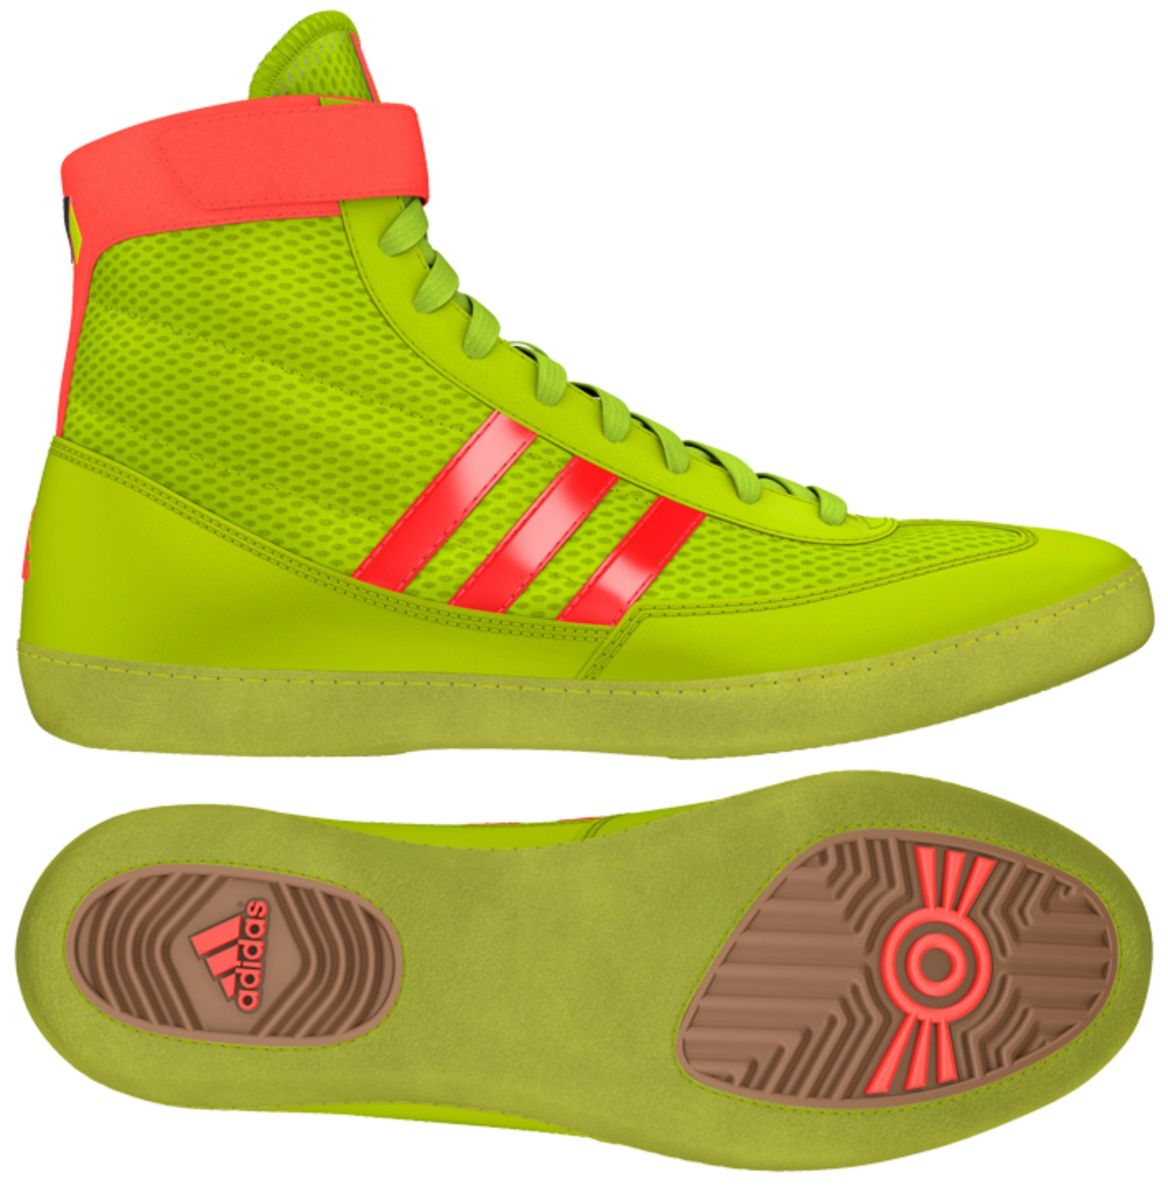 appel Ja Merchandiser Adidas Combat Speed 4 YOUTH Wrestling Shoes Slr Yellow/Slr Red